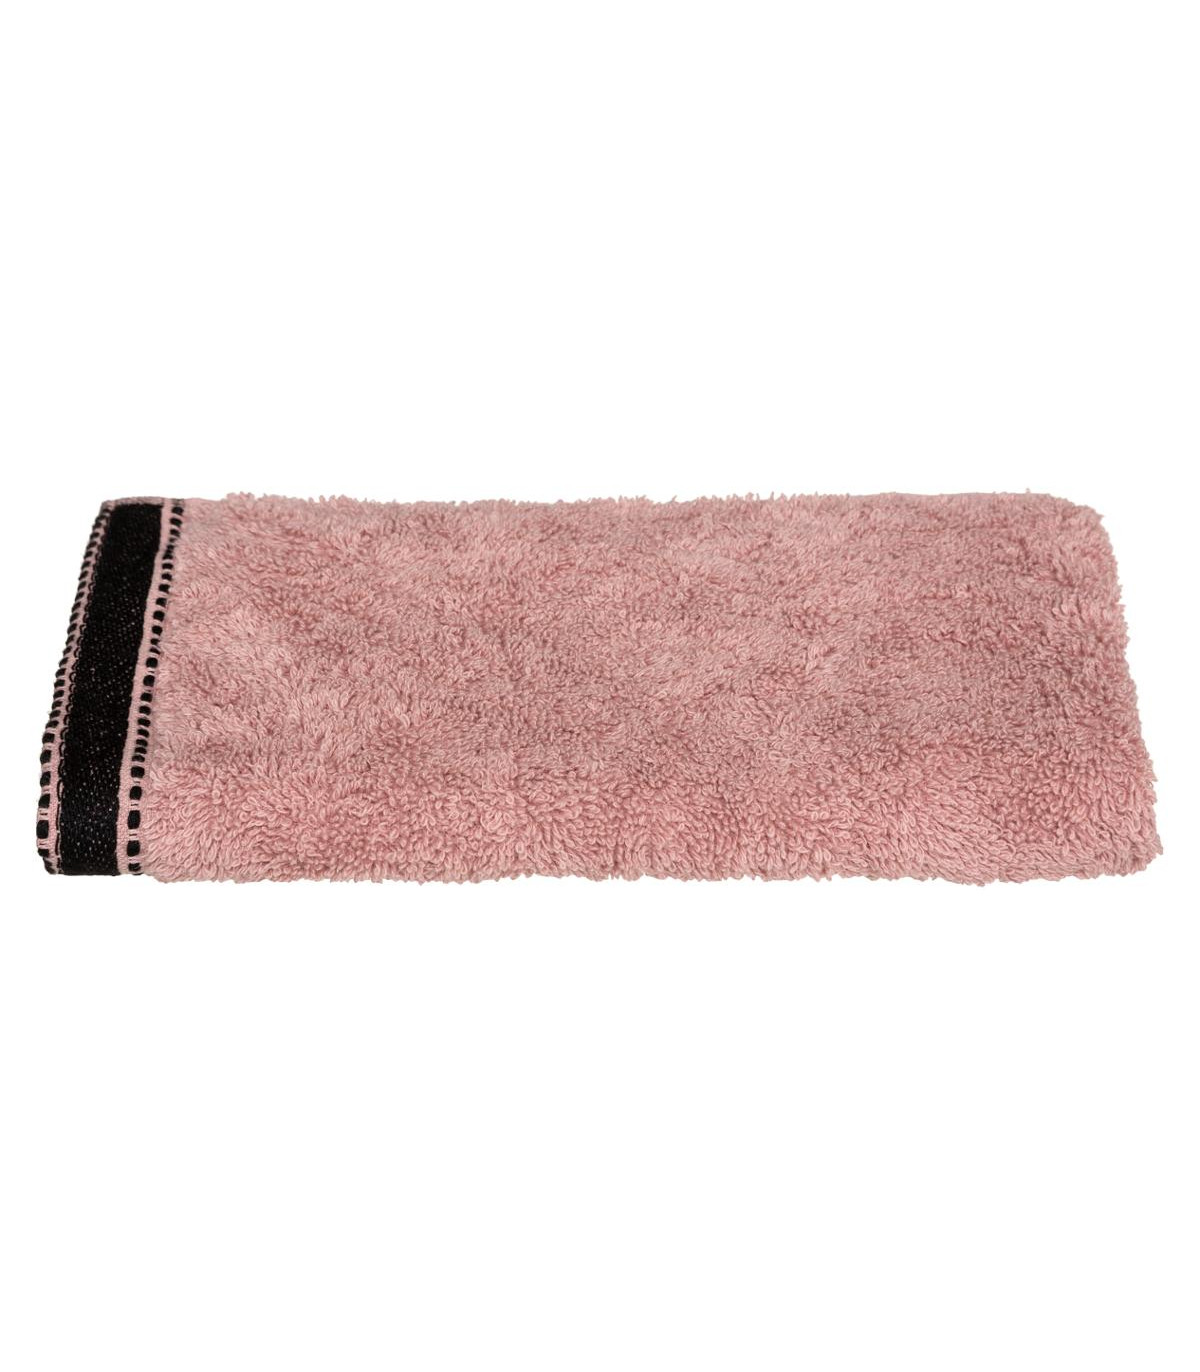 serviette-de-toilette-joia-rose-tissu-eponge-30-x-50-cm (1)